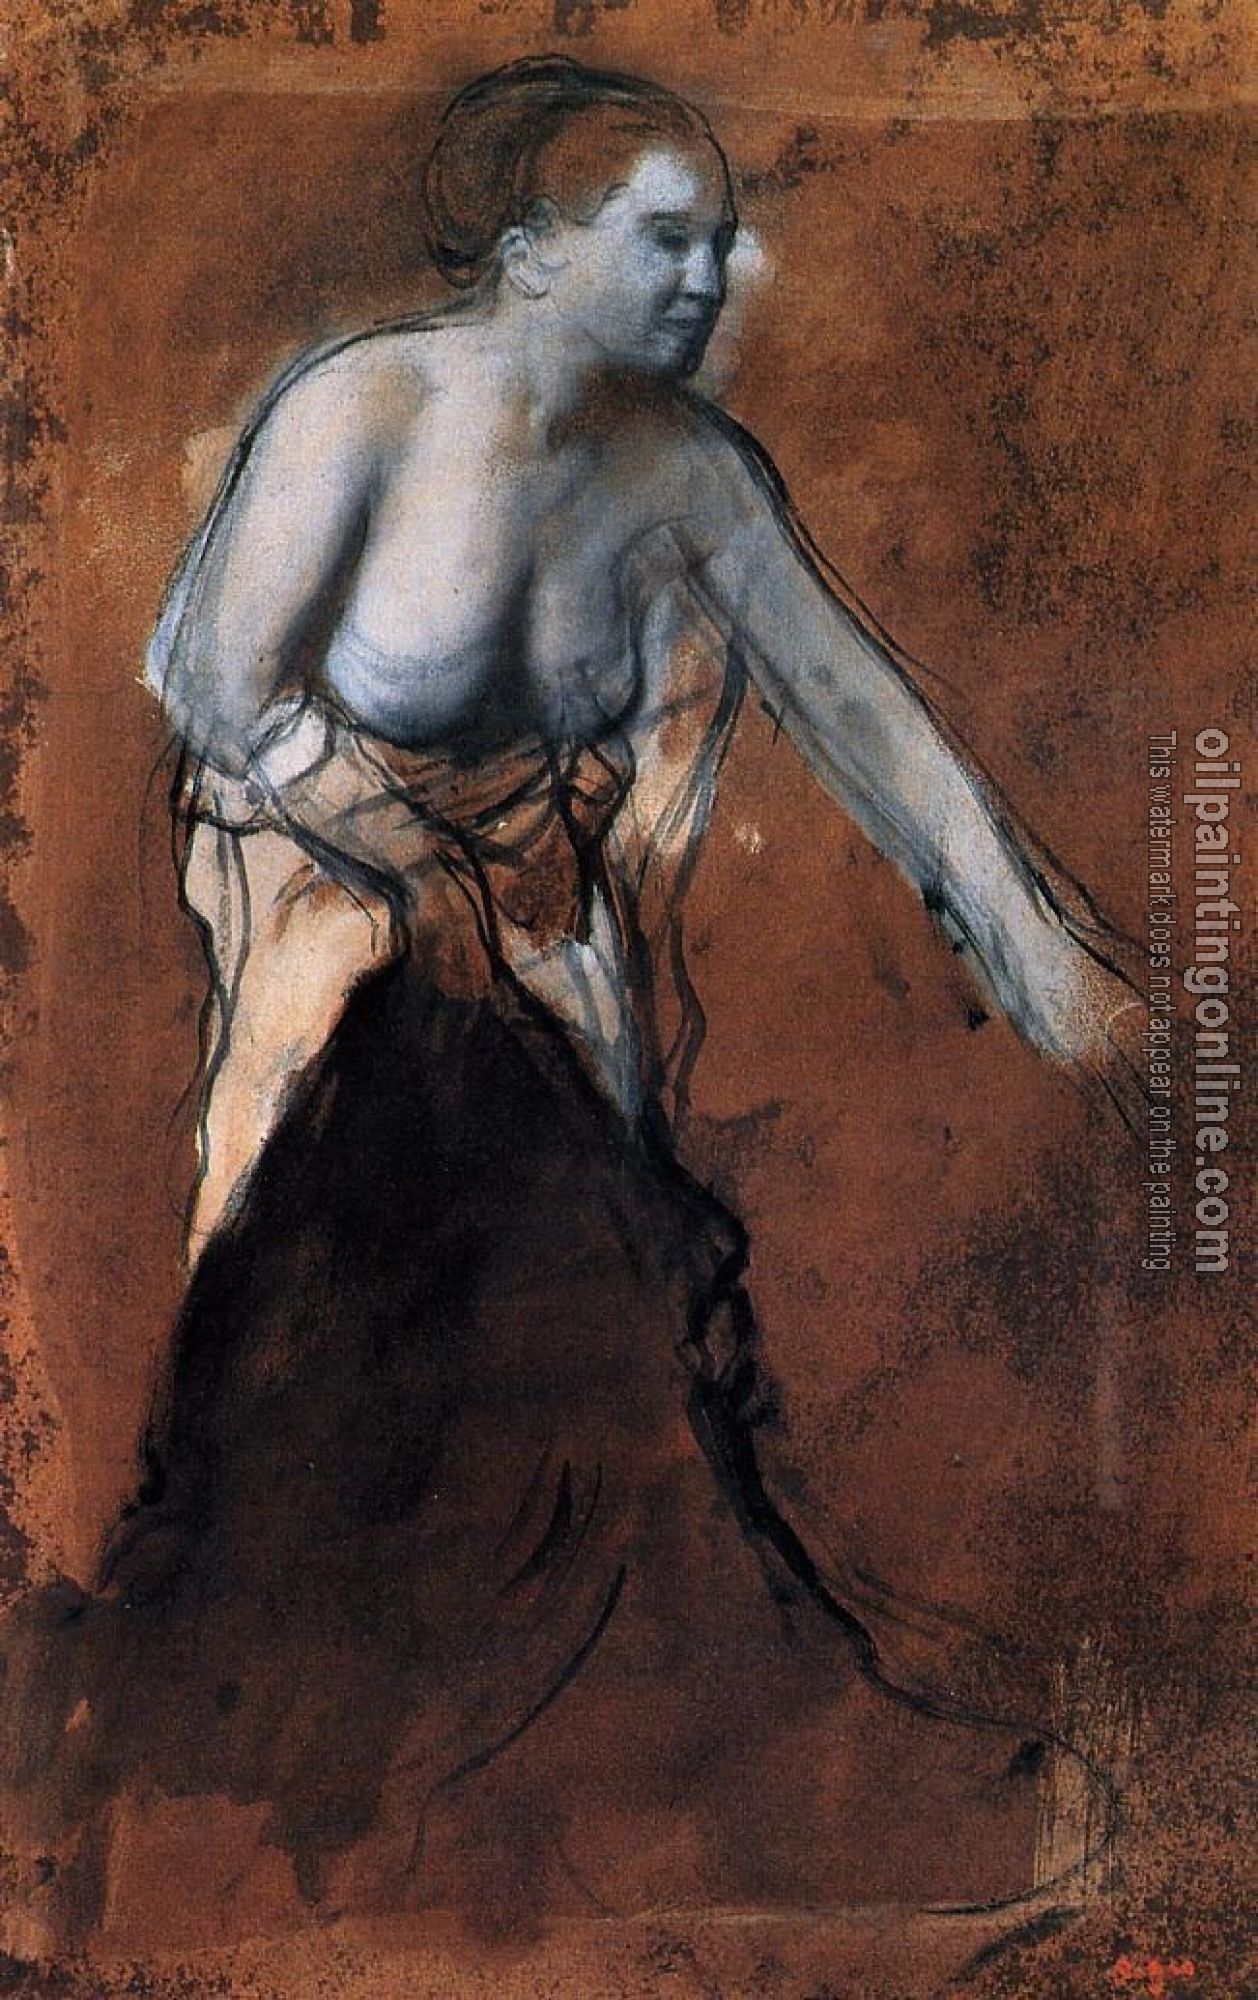 Degas, Edgar - Standing Female Figure with Bared Torso